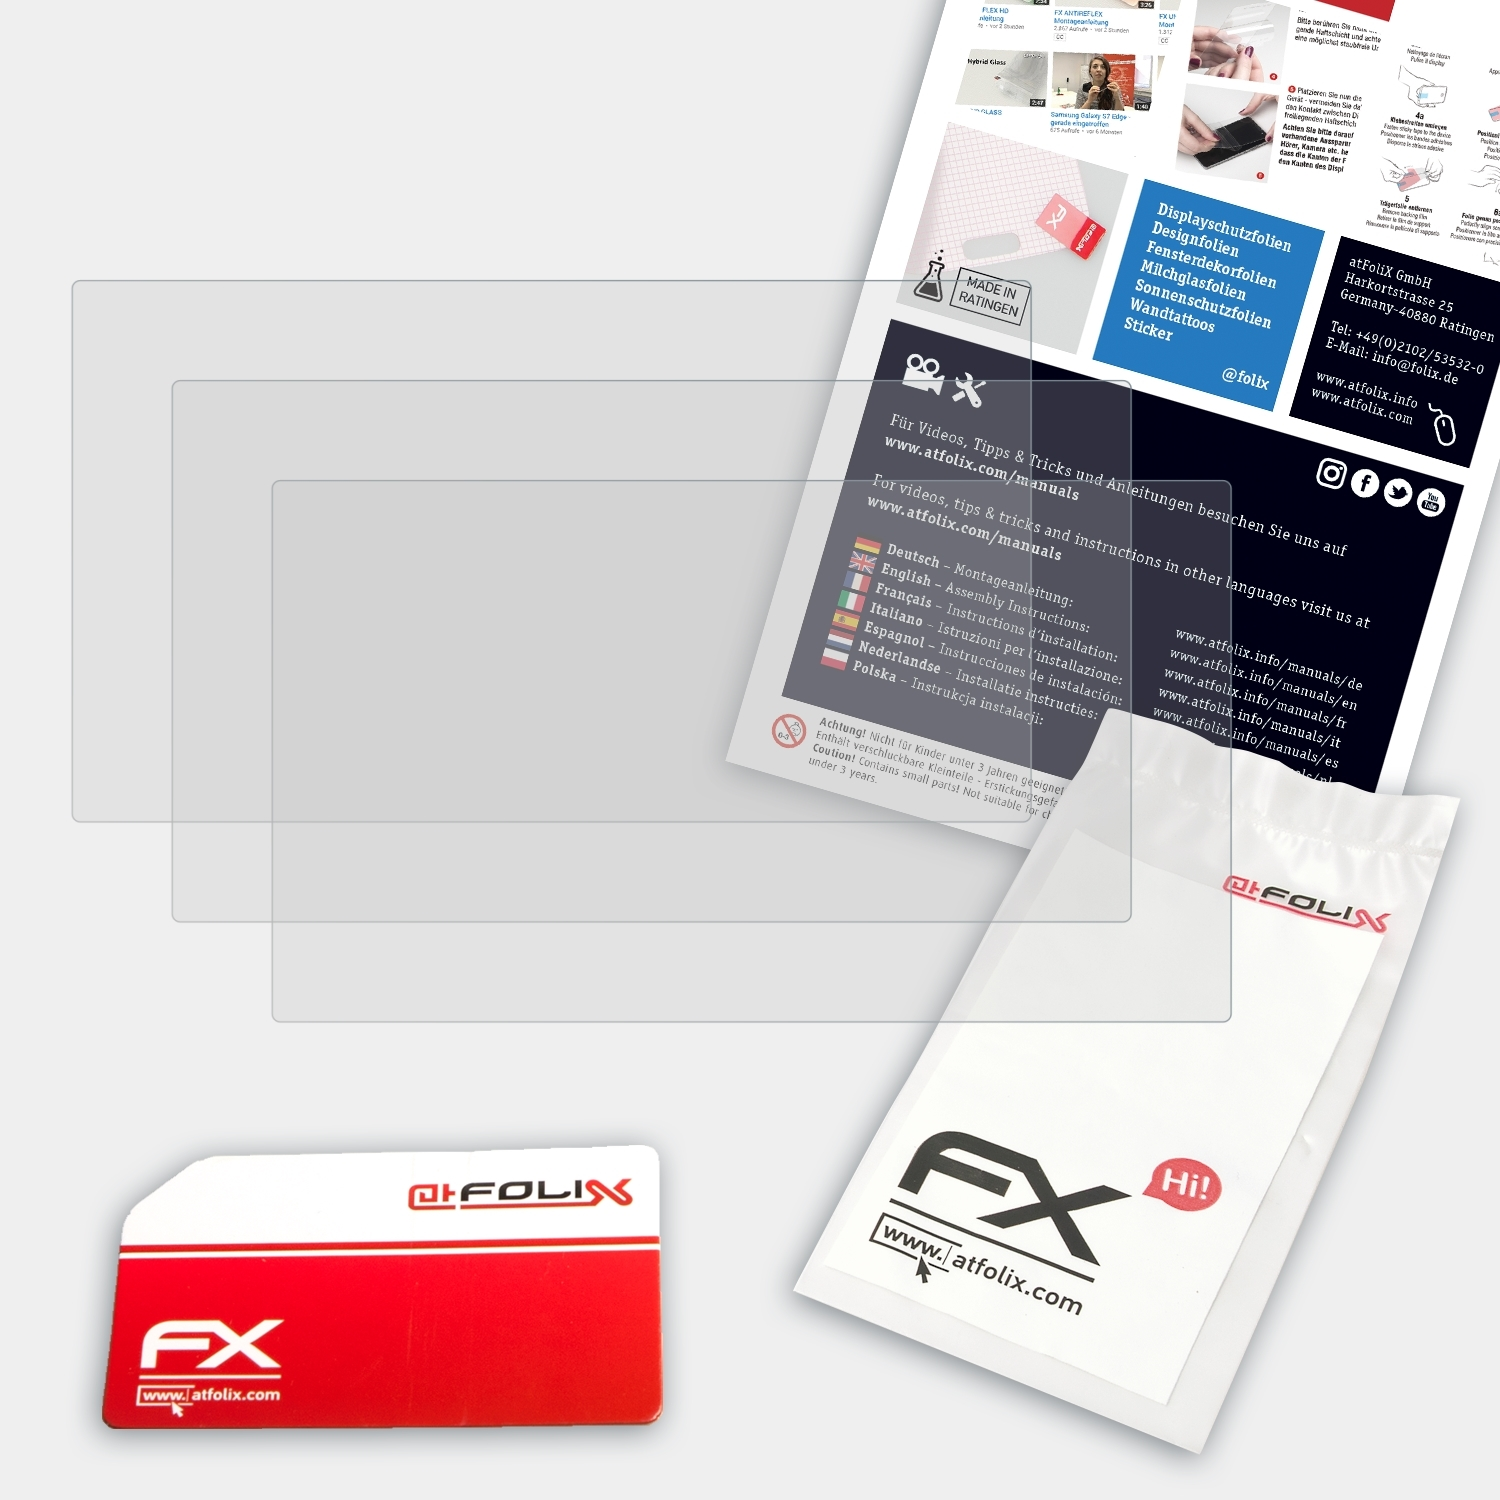 3x Sony Displayschutz(für FX-Antireflex /AX33) FDR-AXP33 ATFOLIX